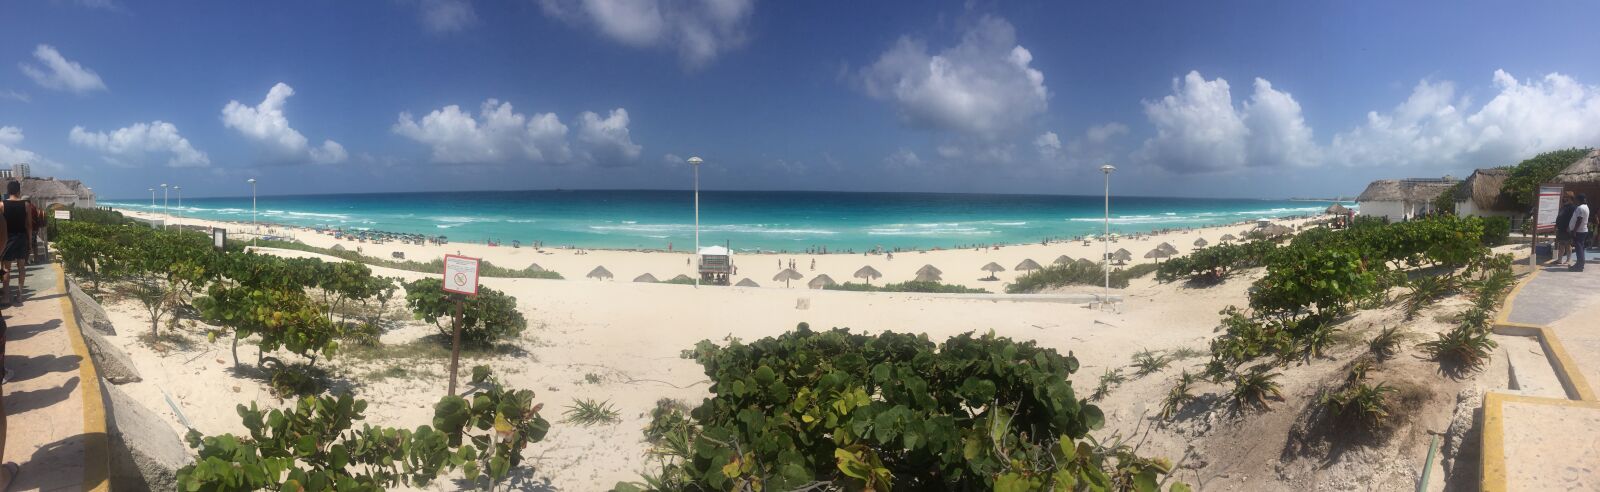 Apple iPhone 6 sample photo. Beach, cancun, travel photography